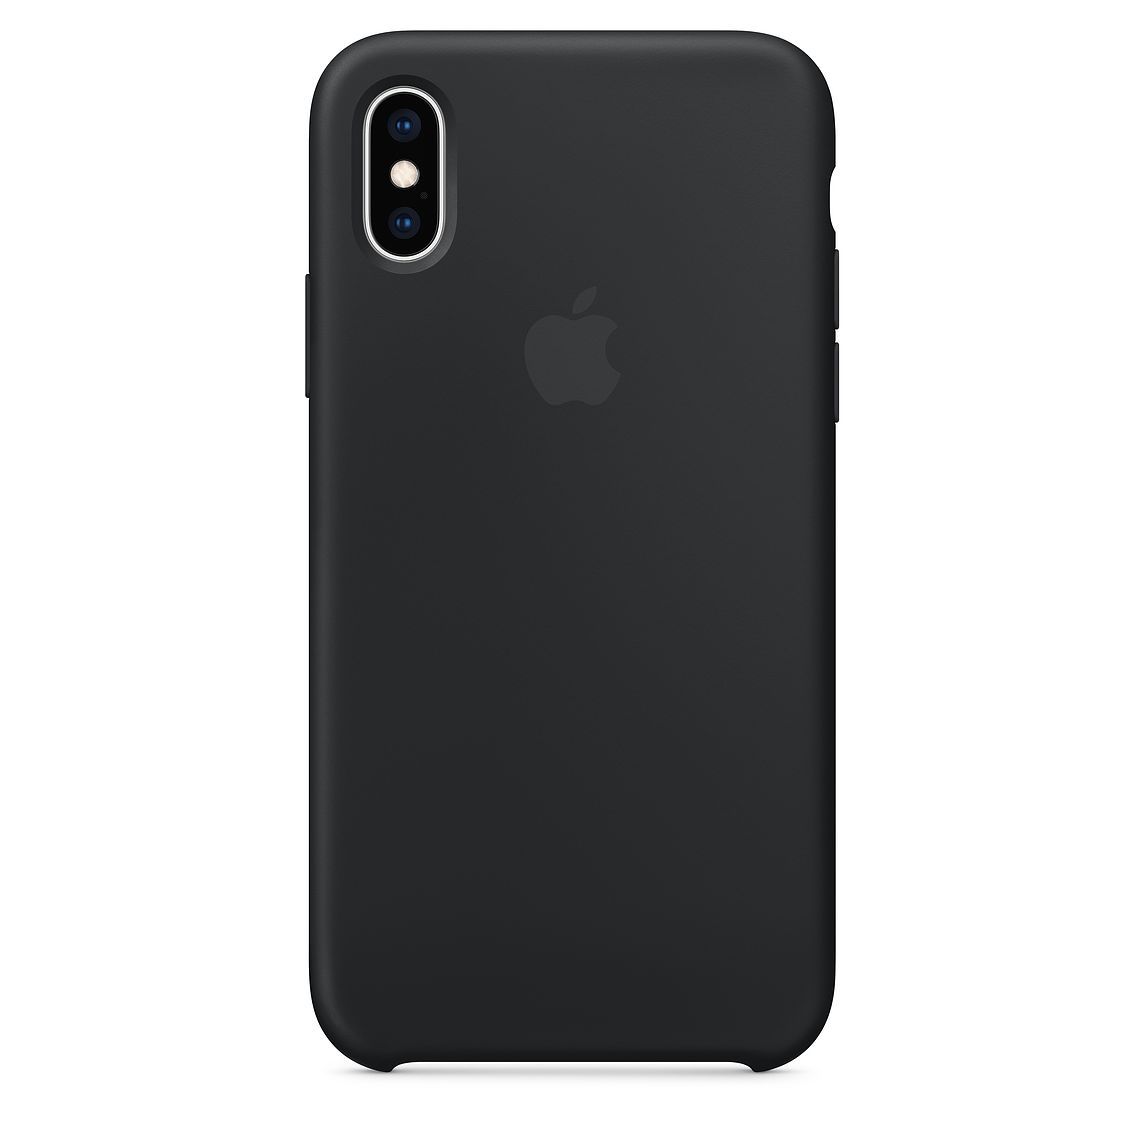 apple coque en silicone iphone xs